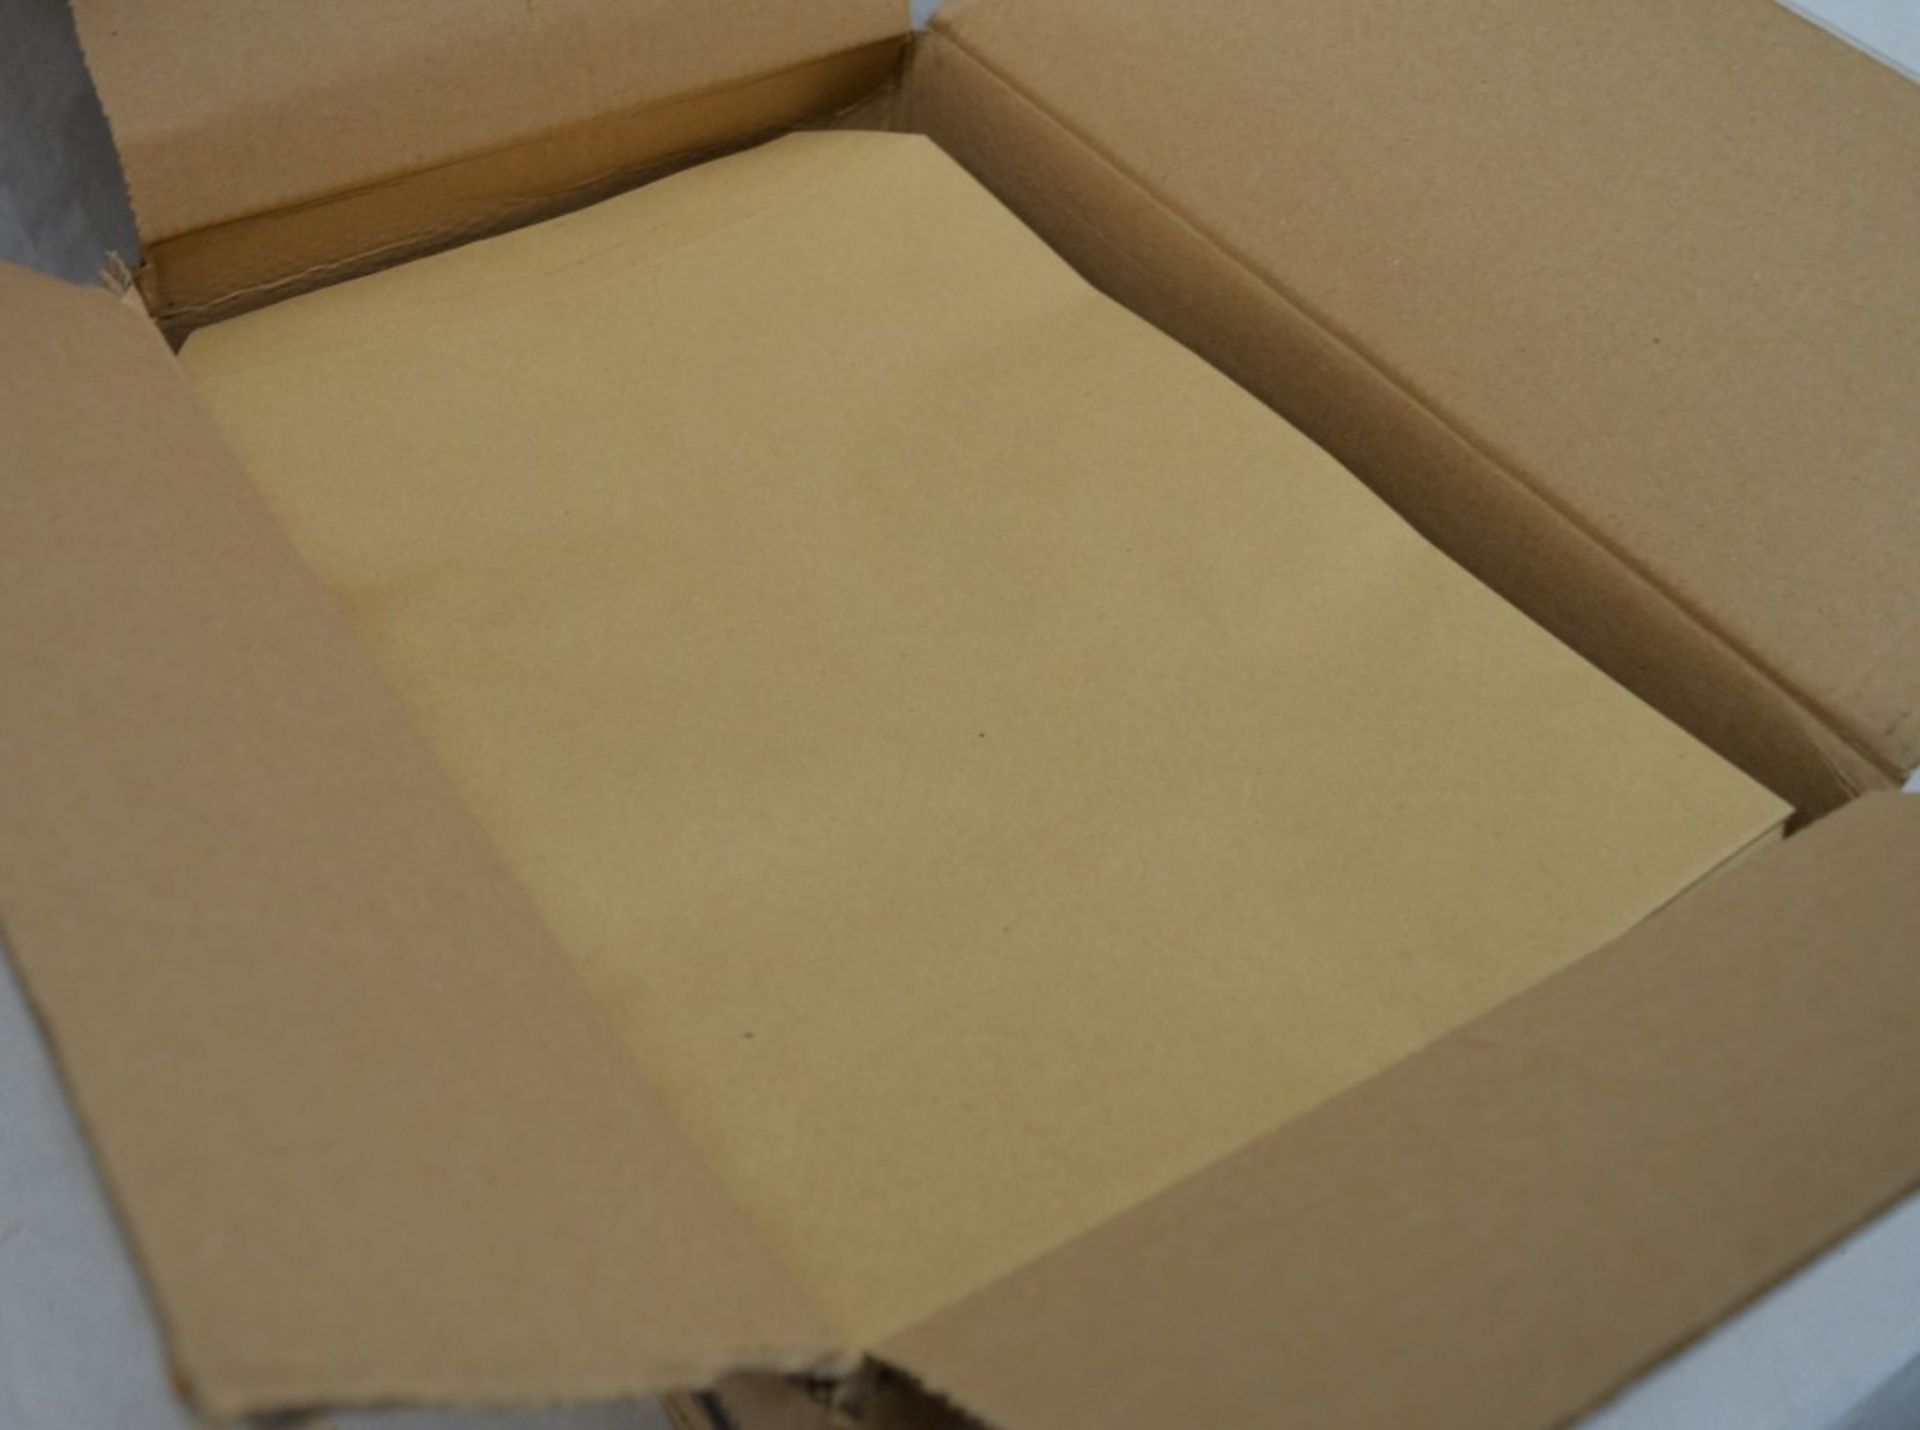 4 x Boxes of Q-Connect Envelopes C4 90gsm Manilla Self-Seal - KF3419 - 250 Envolopes Per Box - CL011 - Image 3 of 4